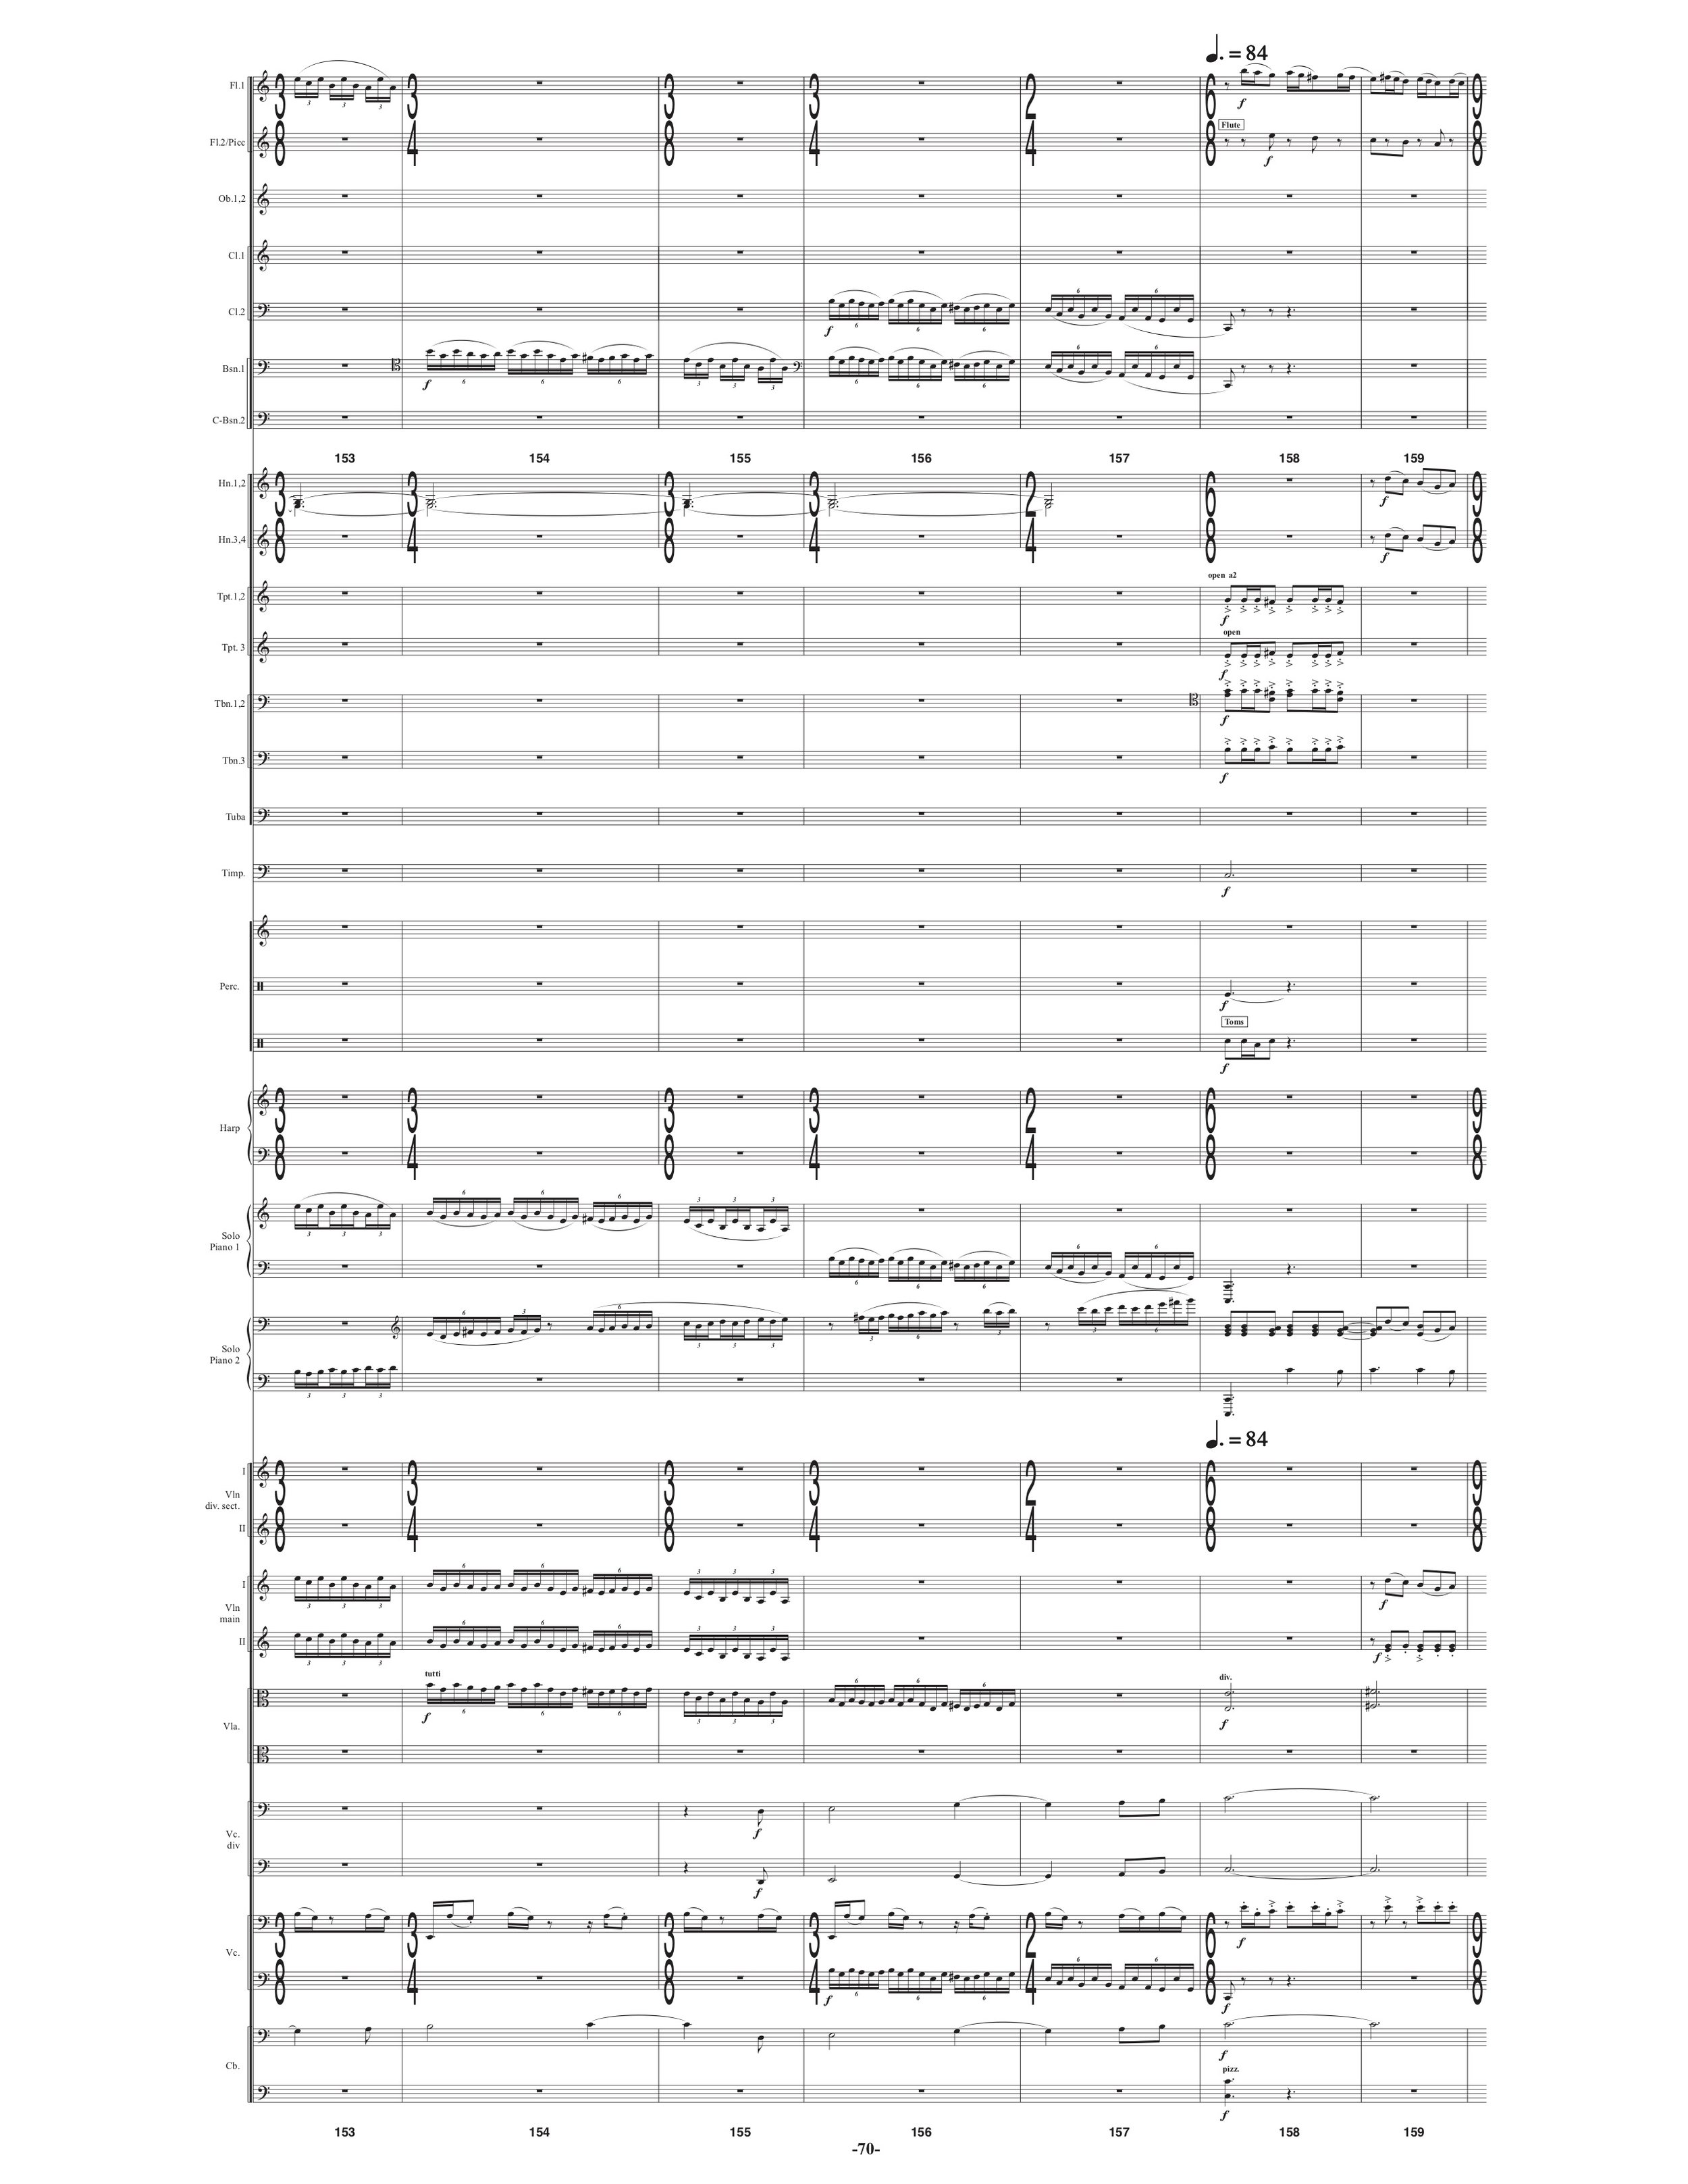 Symphony_Orch & 2 Pianos p75.jpg